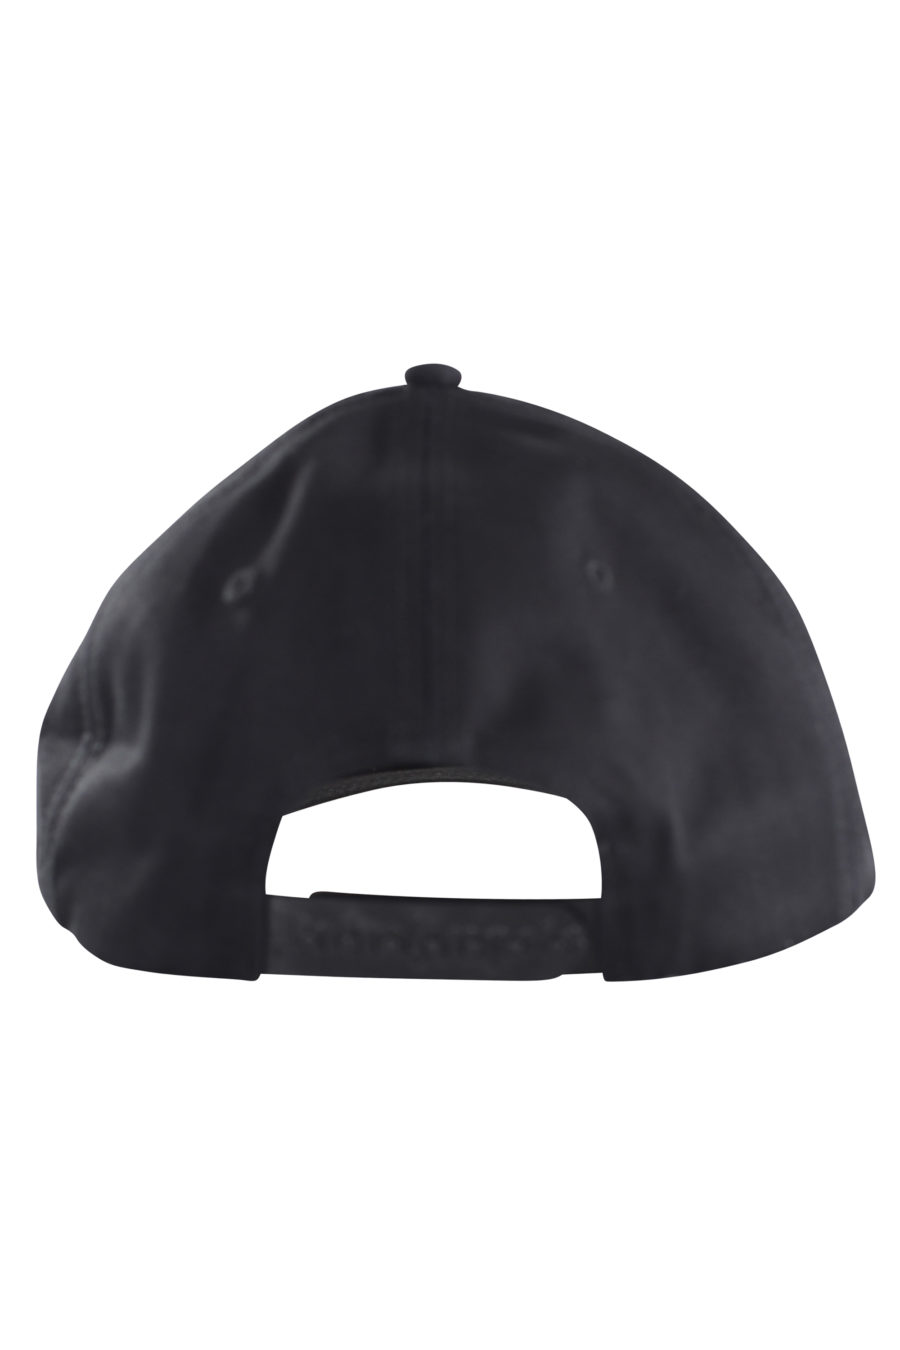 Gorra negra con logo en relieve en la visera - IMG 9617